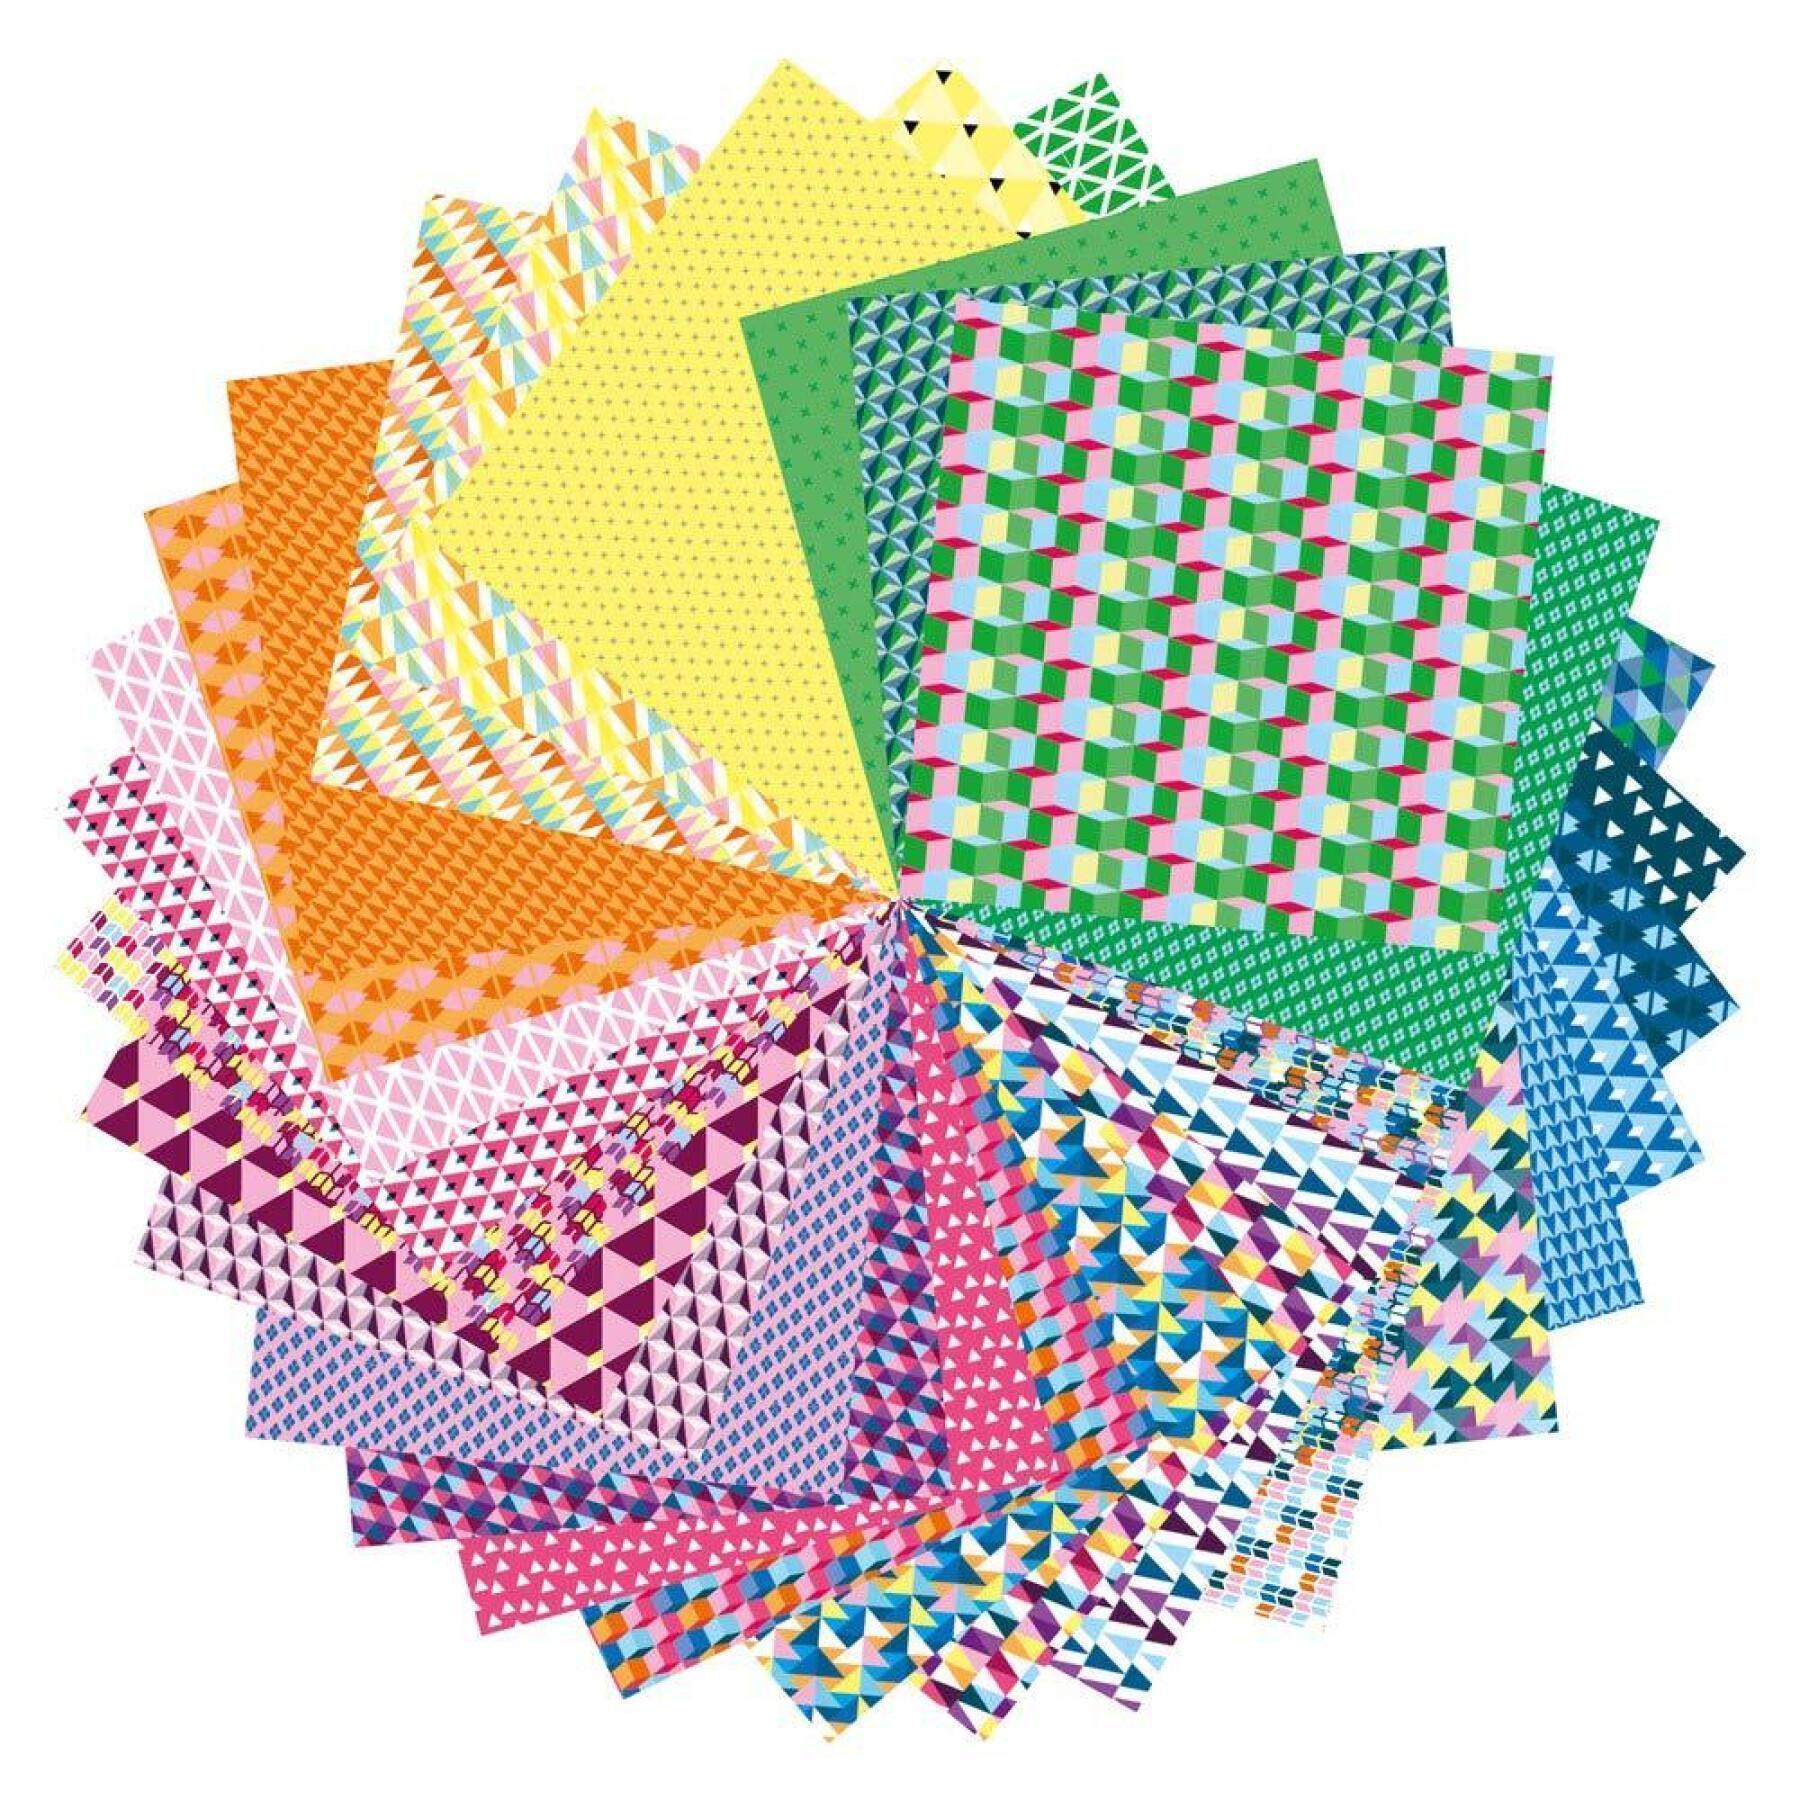 60 sheets origami pouch Avenue Mandarine Geometric 20 x 20 cm, 70g